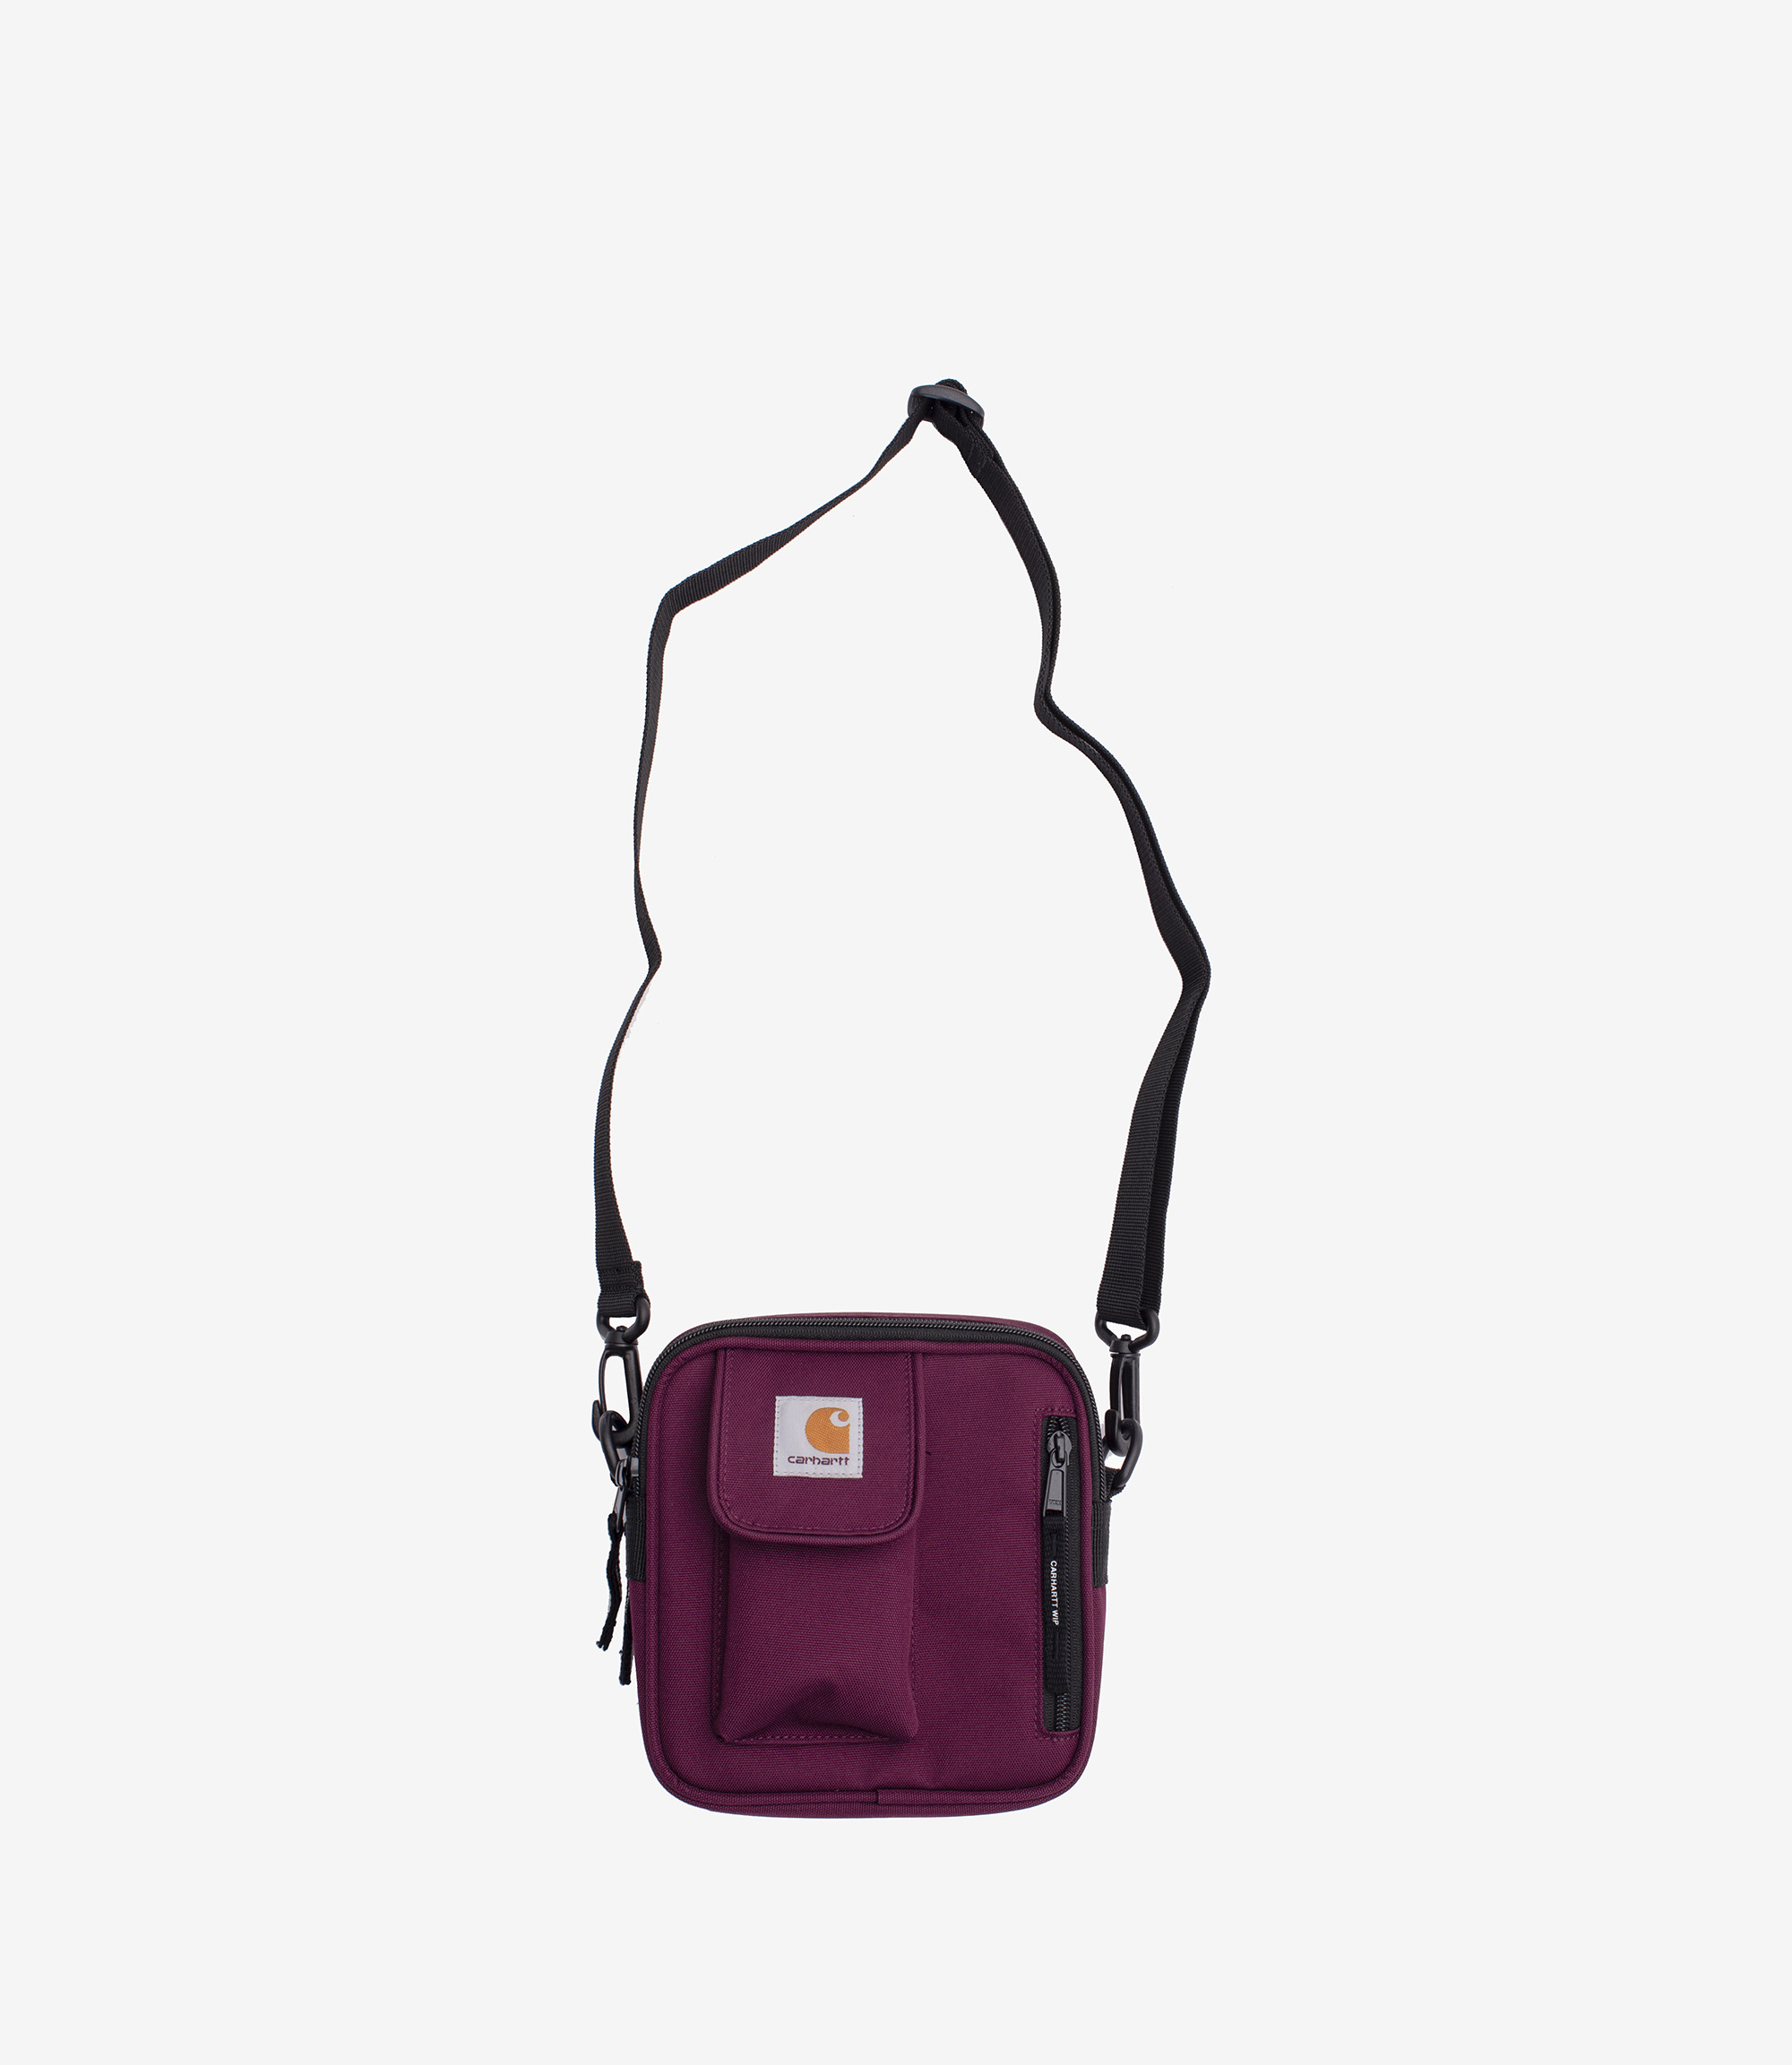 CARHARTT WIP Essentials Bag Size Small Red Shoulder Bag